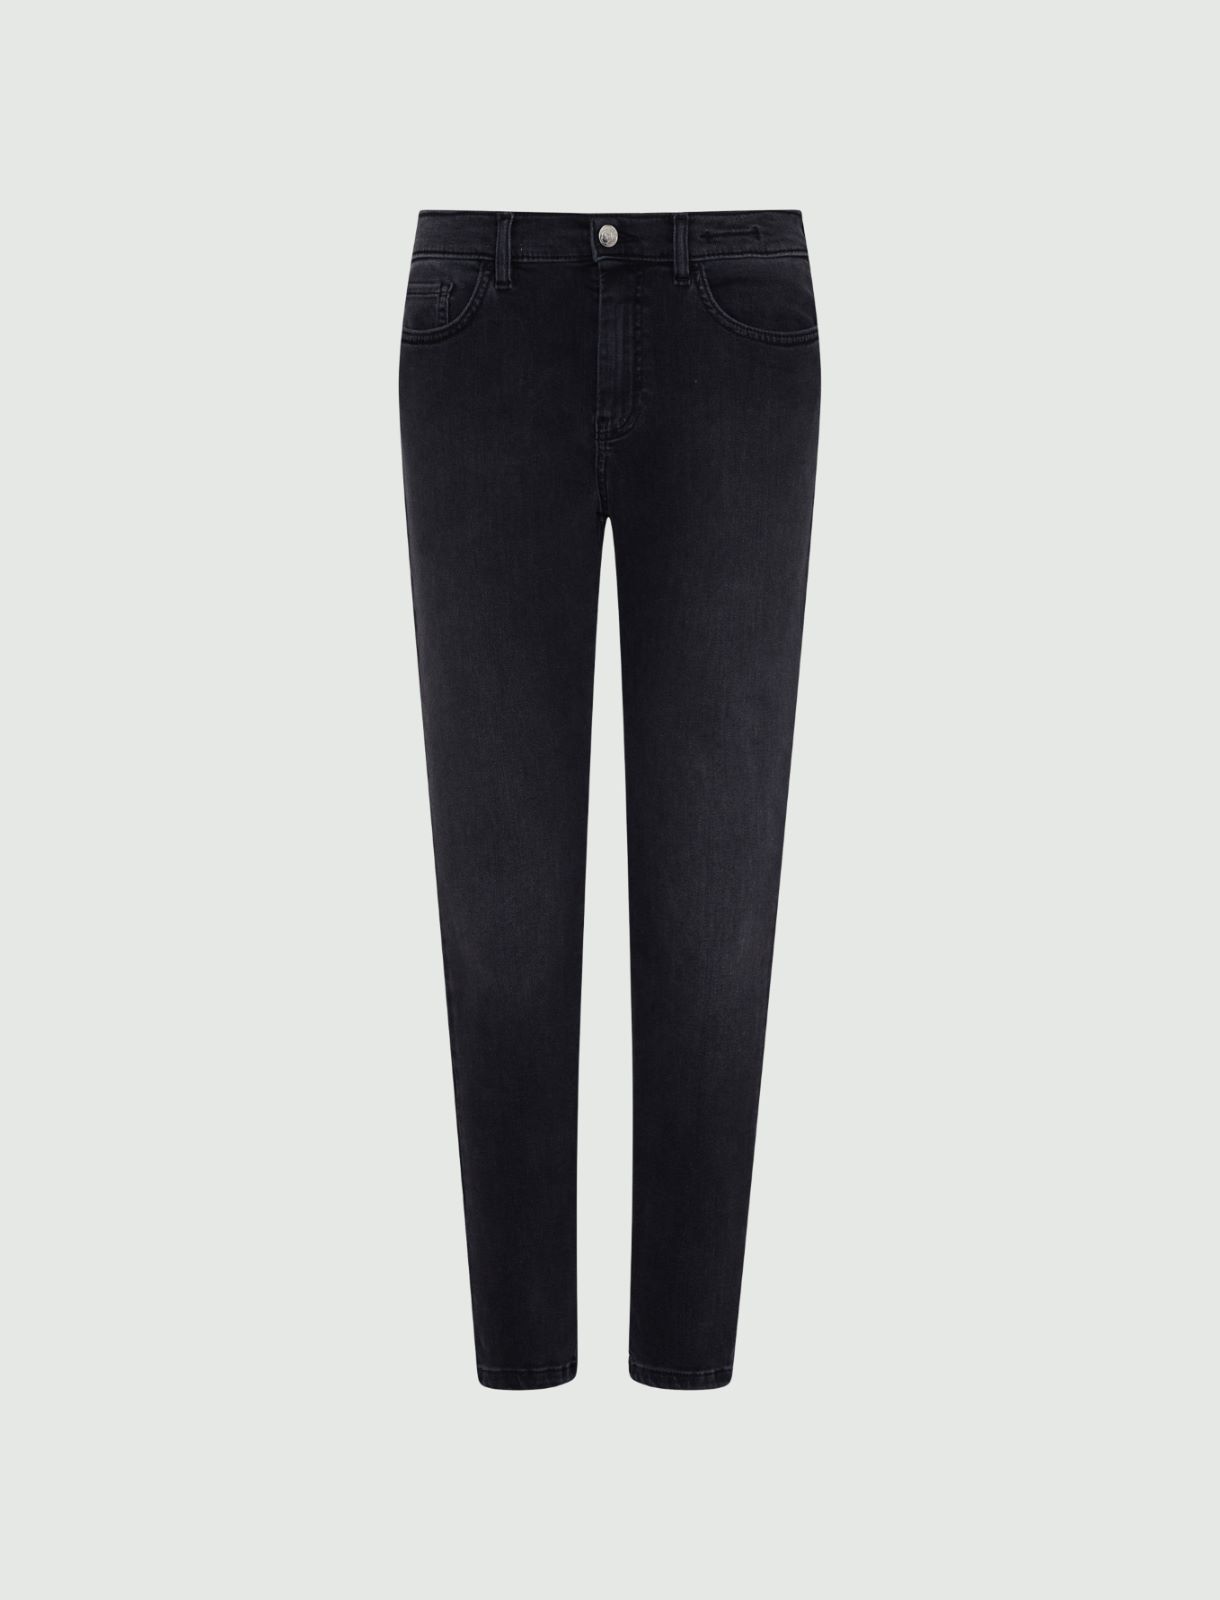 Jeans skinny fit - Nero - Marella - 6